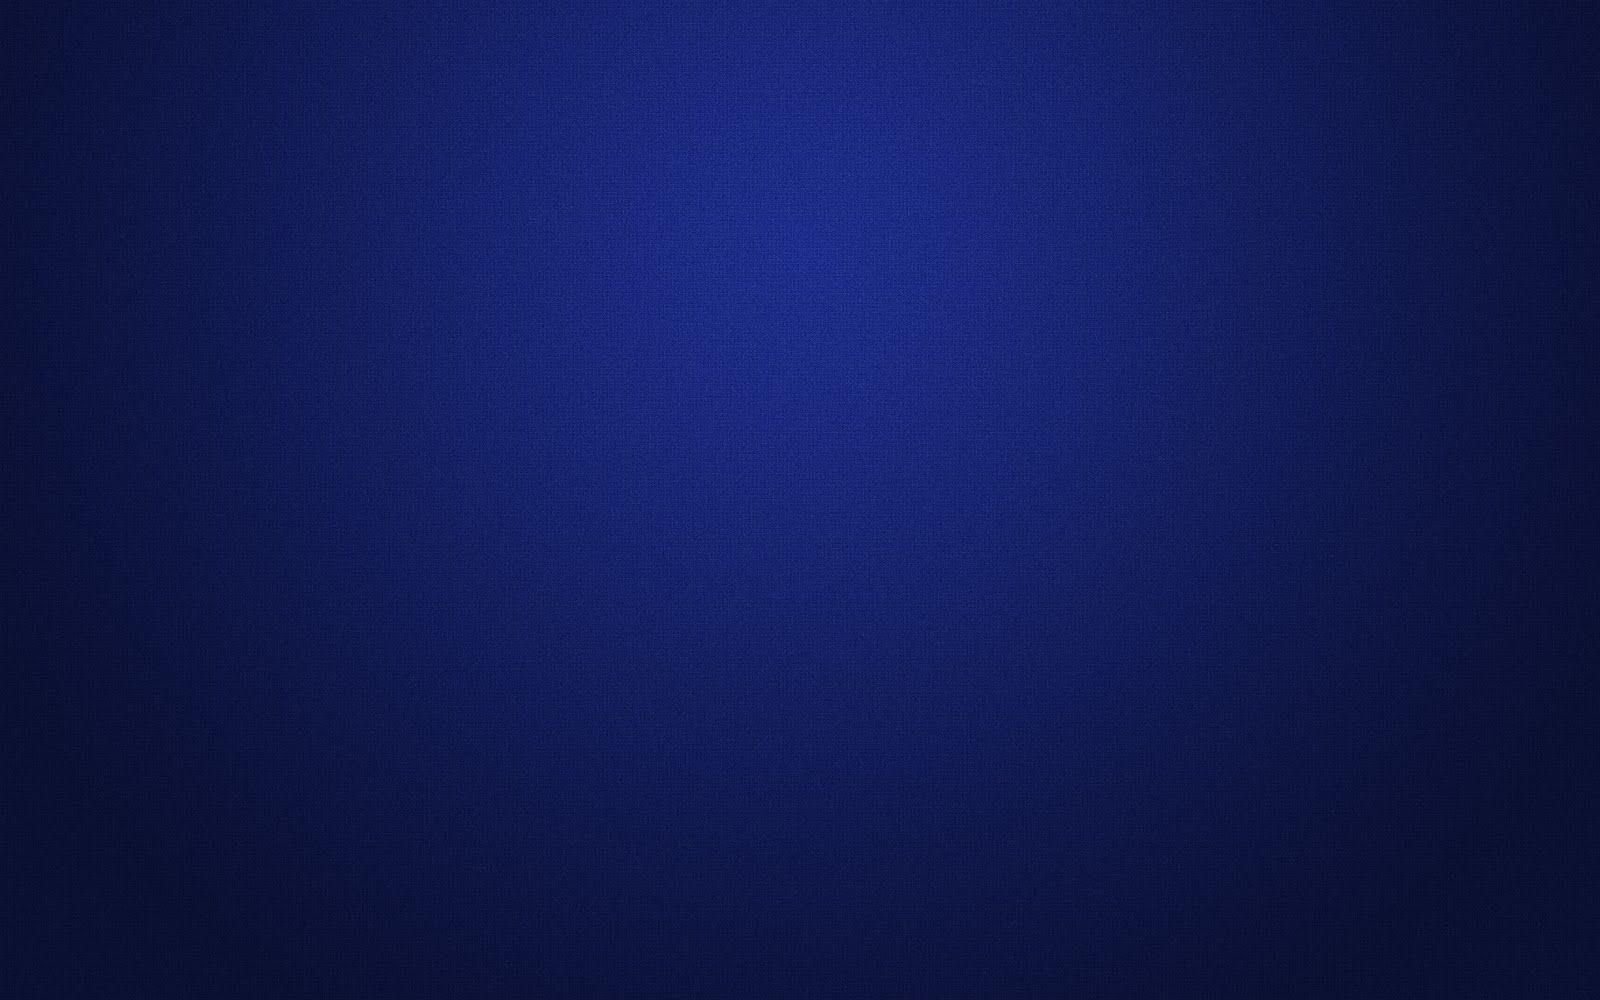 Free Download Dark Blue Backgrounds Image [1600X1000] For Your Desktop